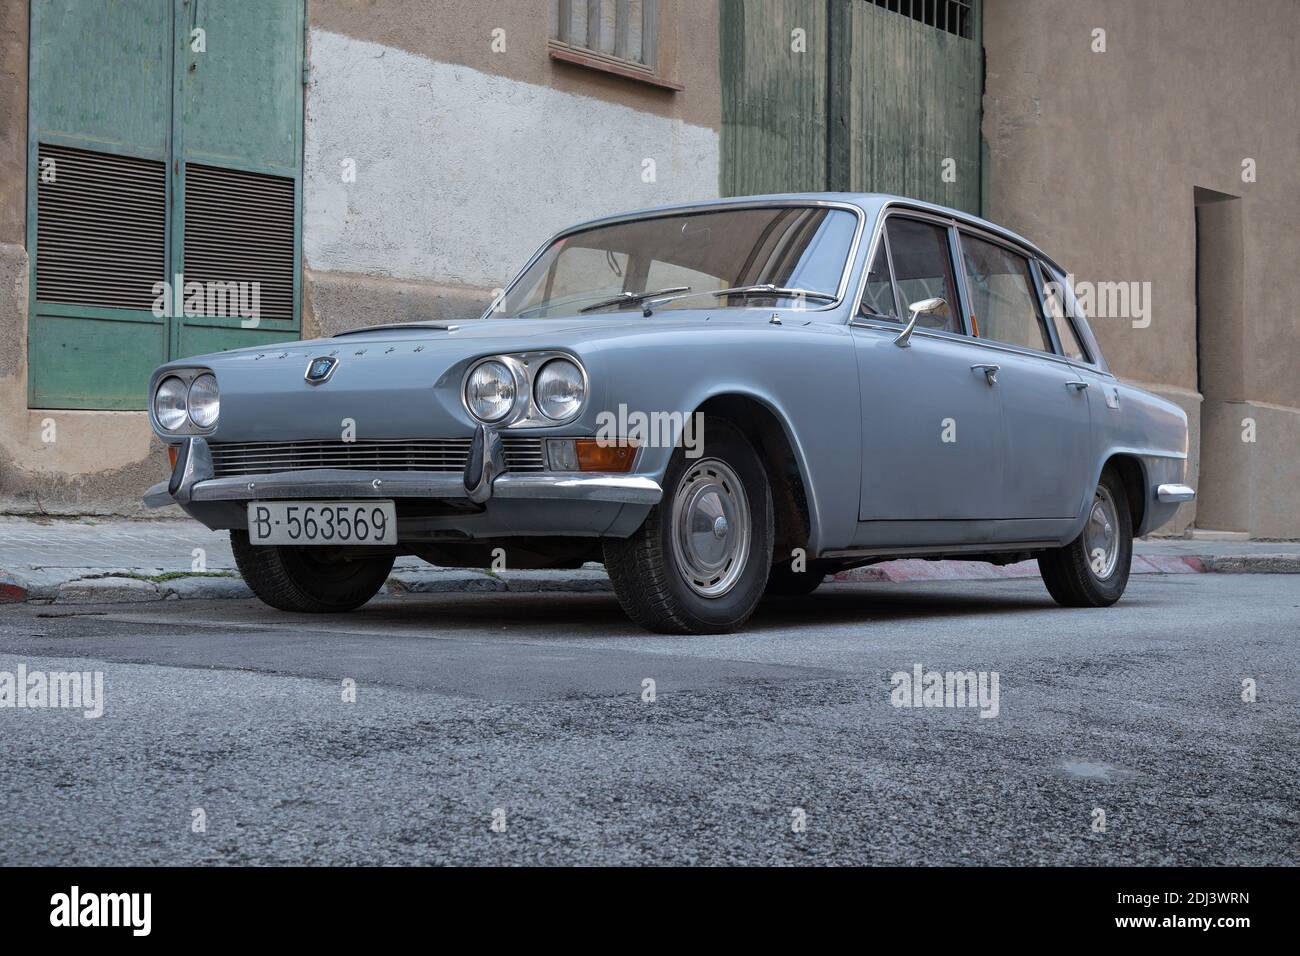 SABADELL, SPANIEN-12. DEZEMBER 2020: 1963-1969 Triumph 2000 Mk 1 Limousine (Overdrive) Stockfoto